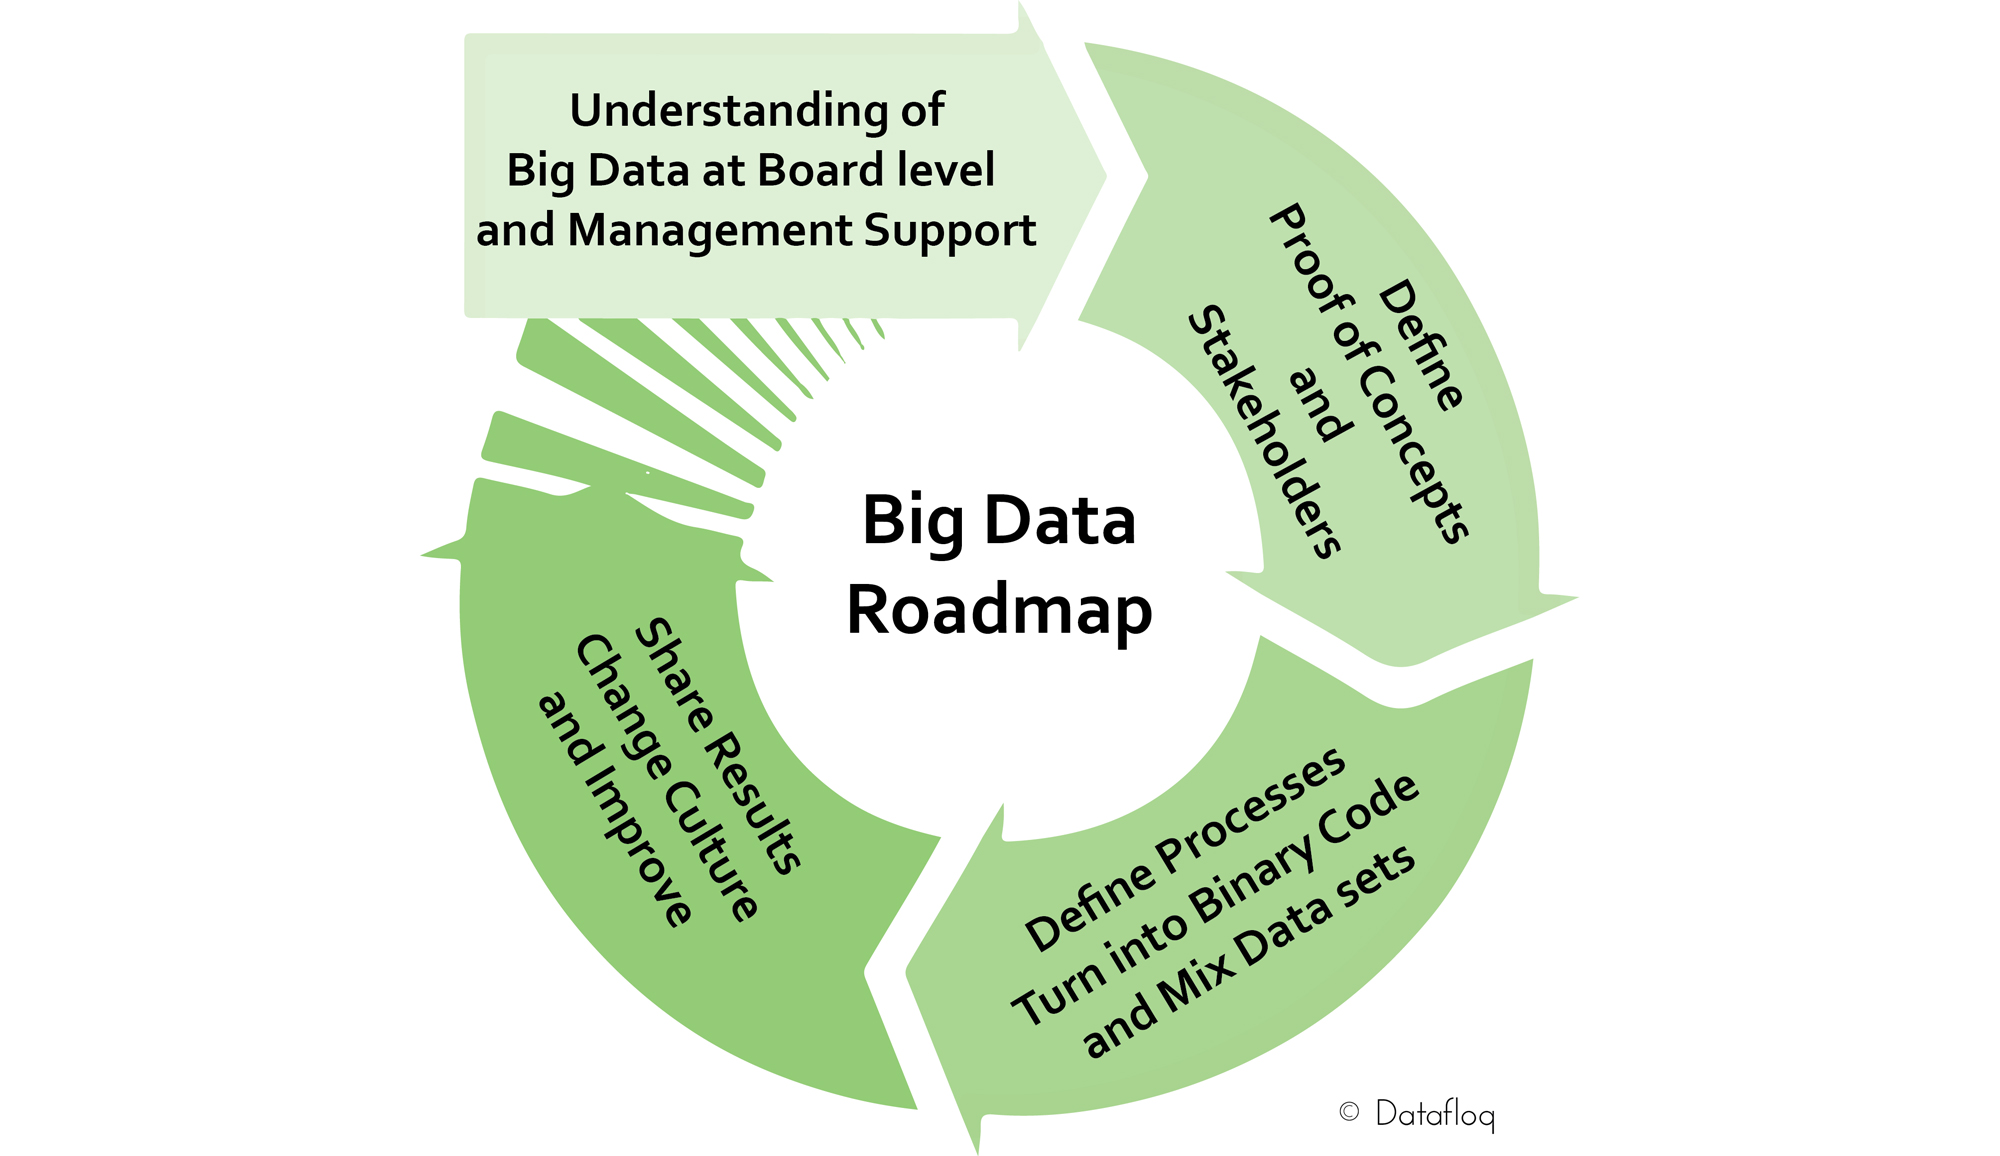 Big Data Roadmap